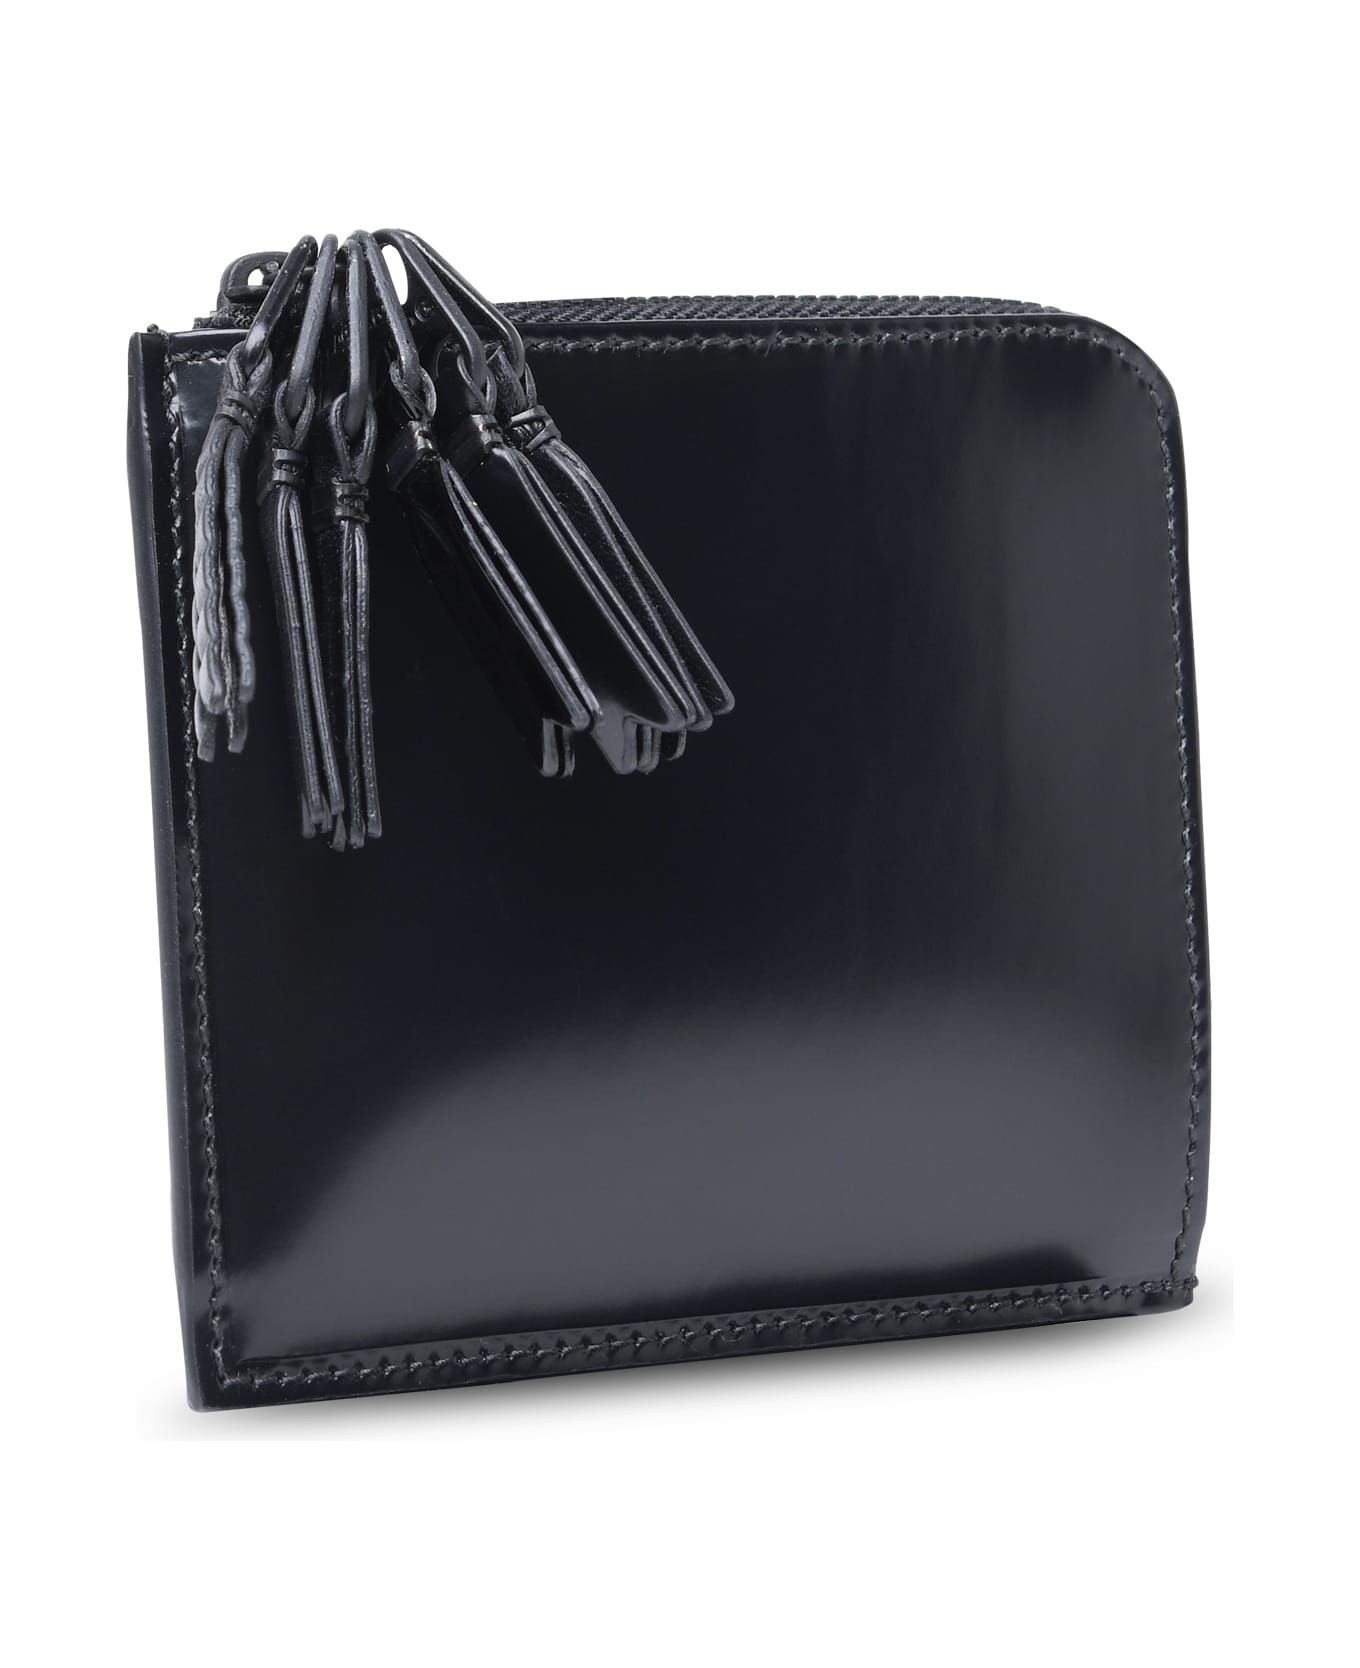 Comme des Garçons Wallet 'medley' Black Leather Wallet - Black 財布